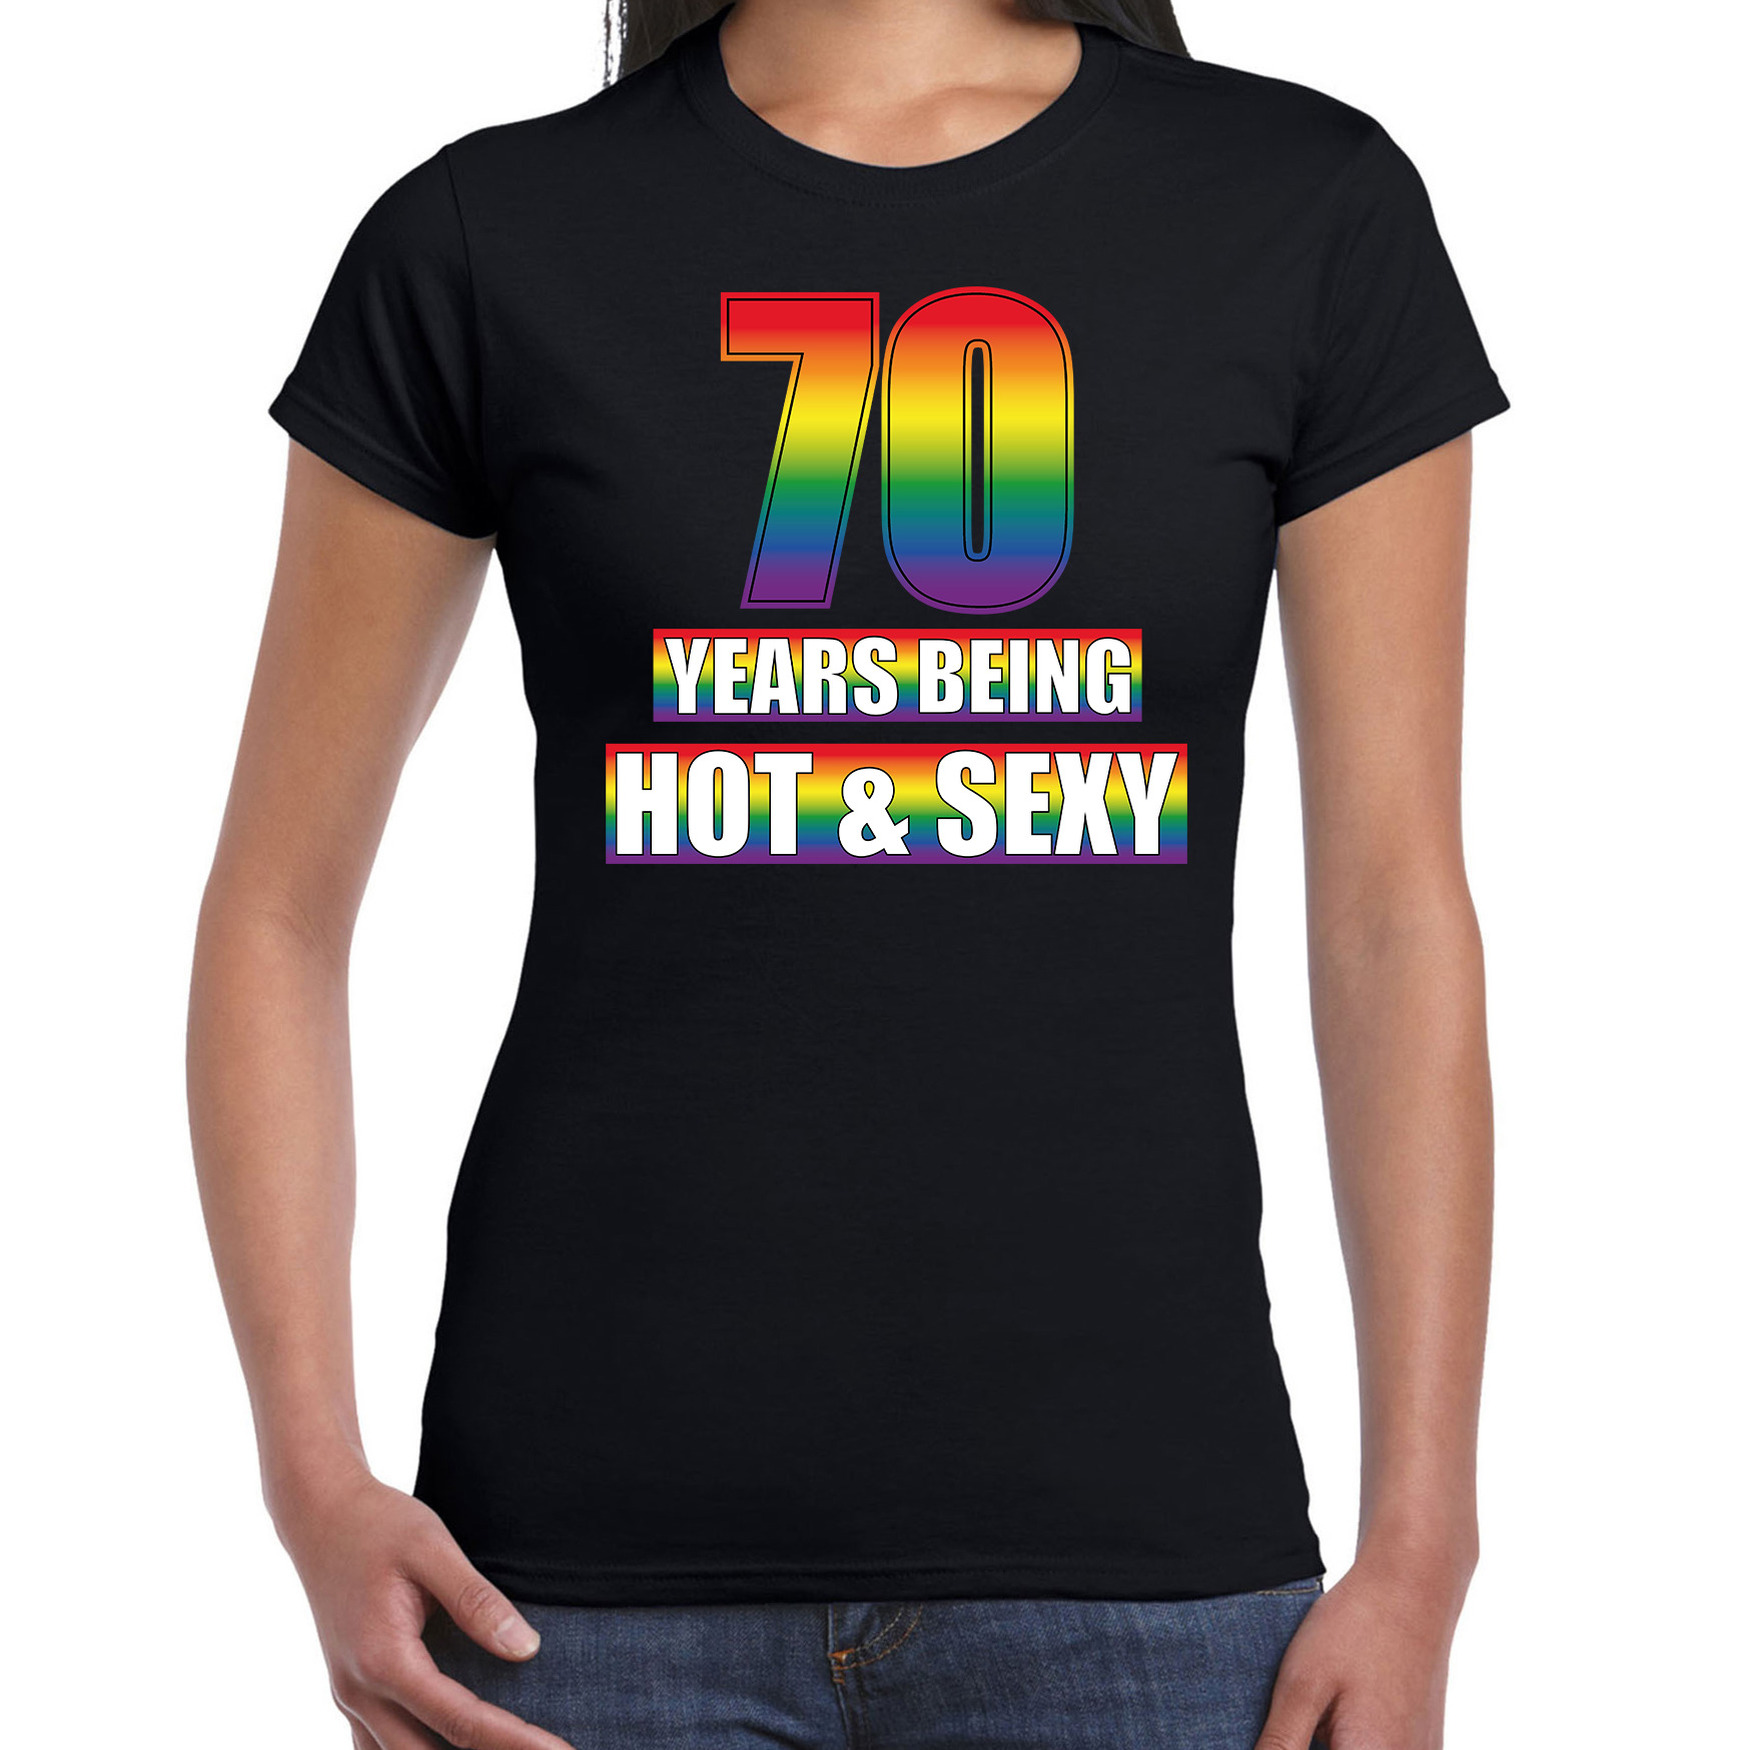 Hot en sexy 70 jaar verjaardag cadeau t-shirt zwart voor dames Gay- LHBT kleding-outfit